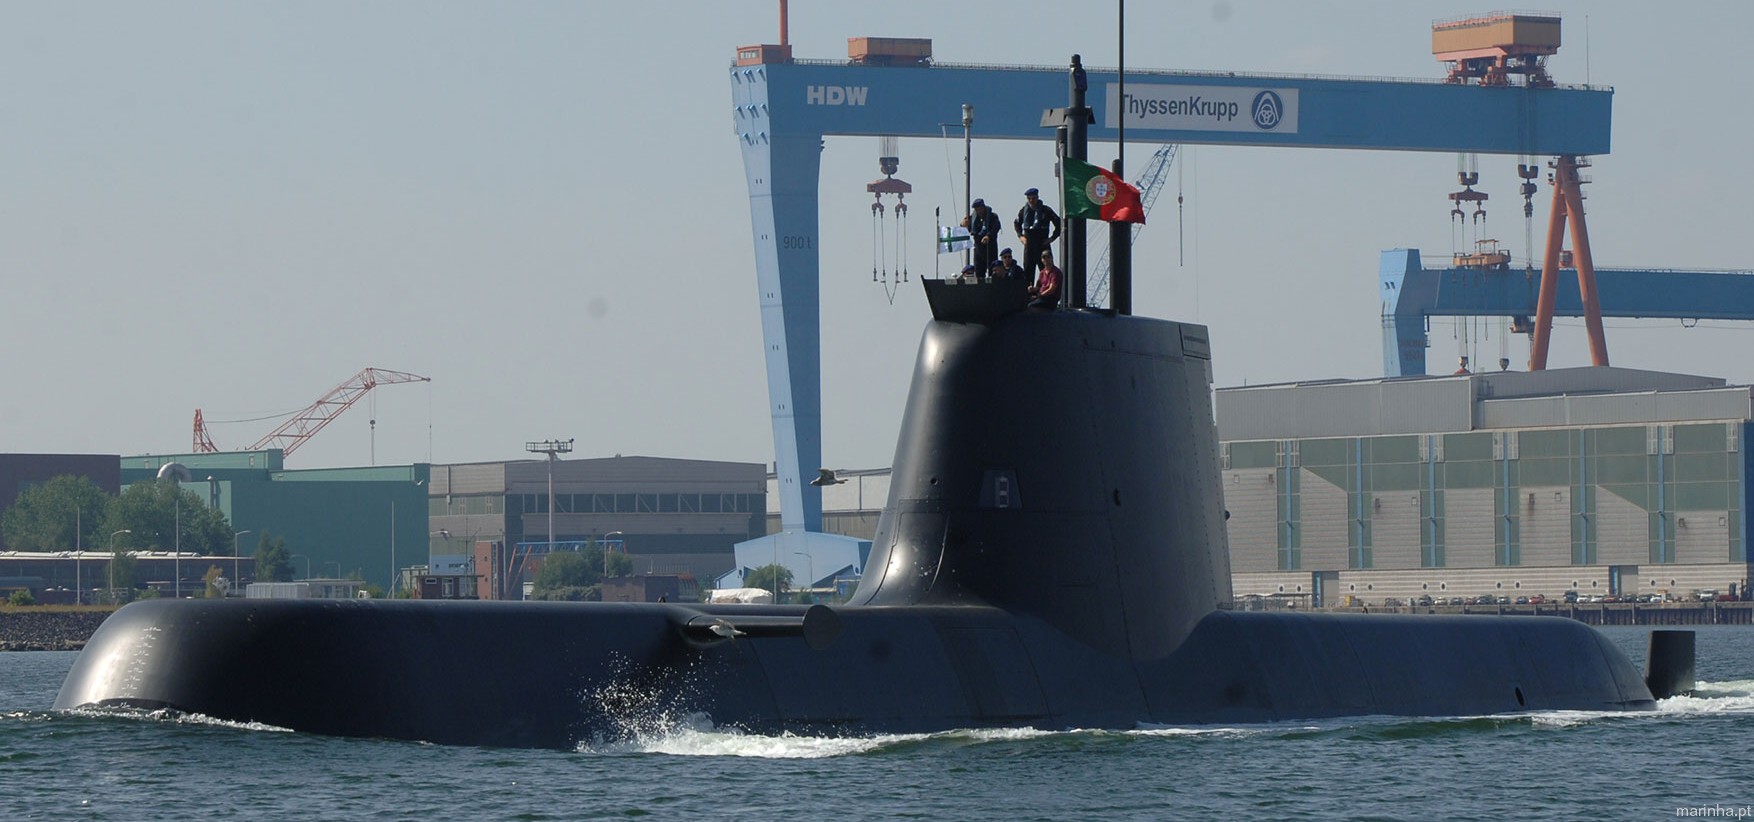 s-160 nrp tridente class type 209pn attack submarine ssk aip portuguese navy marinha 12